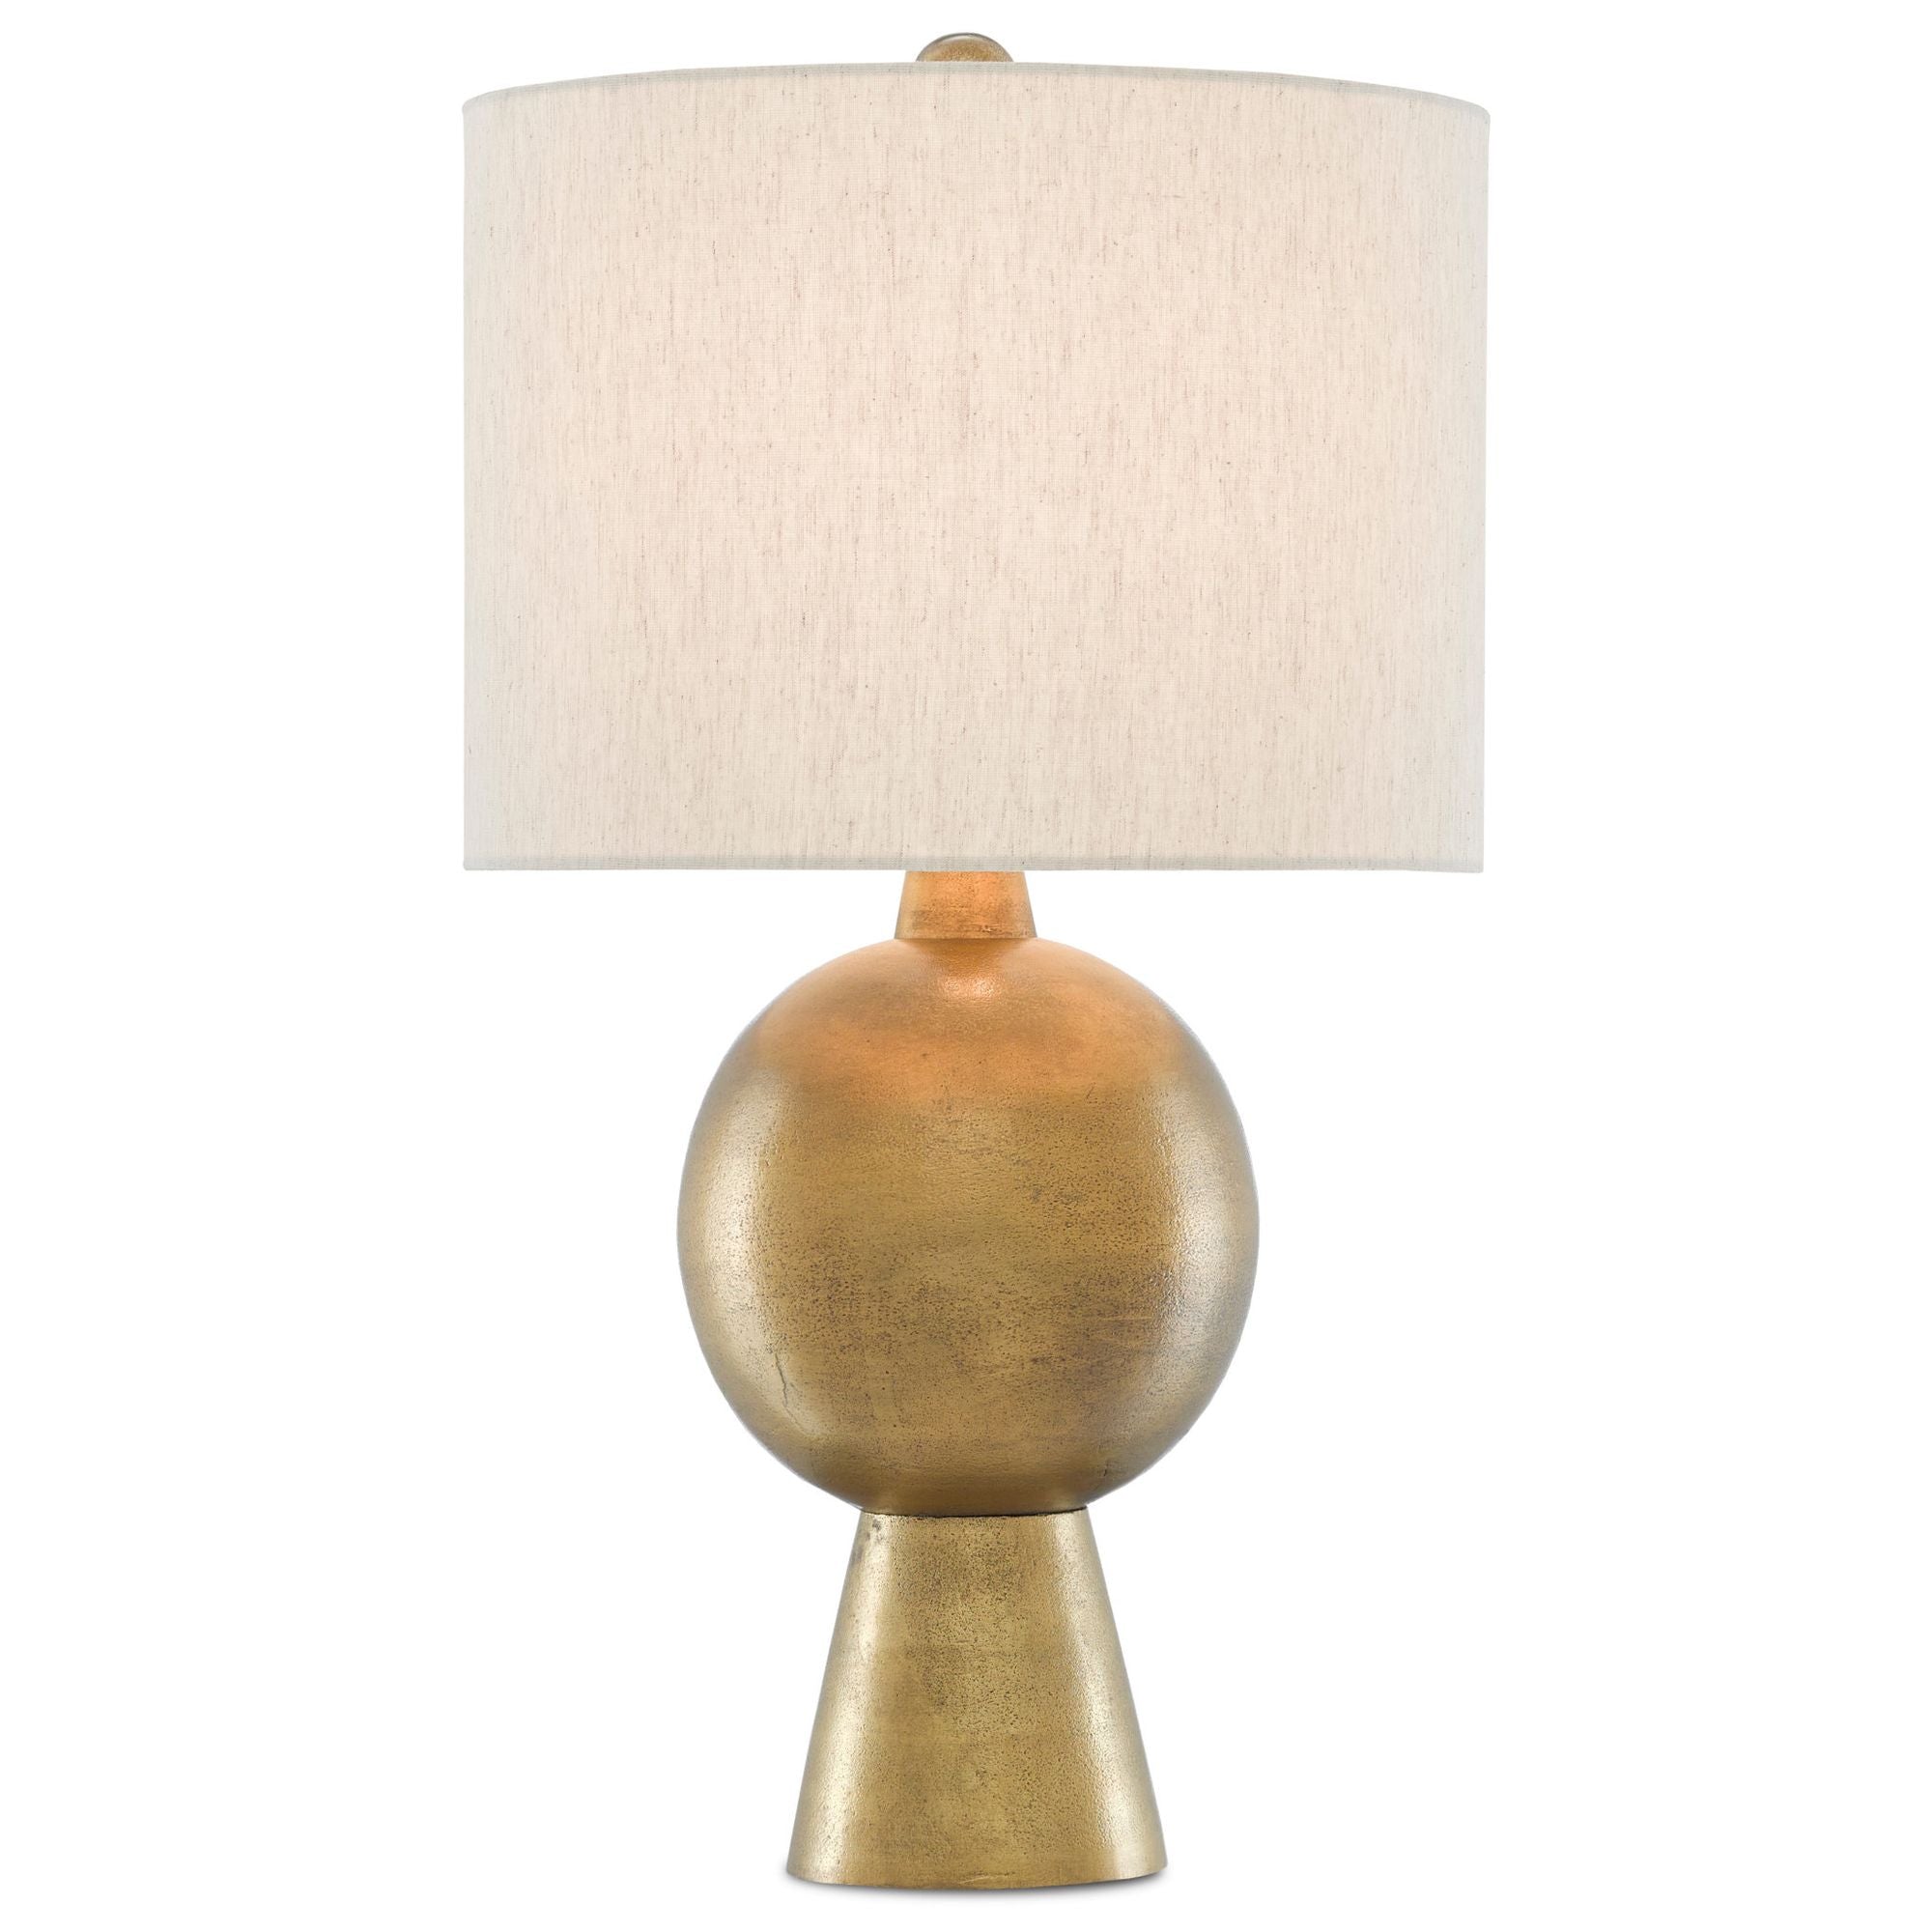 Rami Brass Table Lamp - Antique Brass